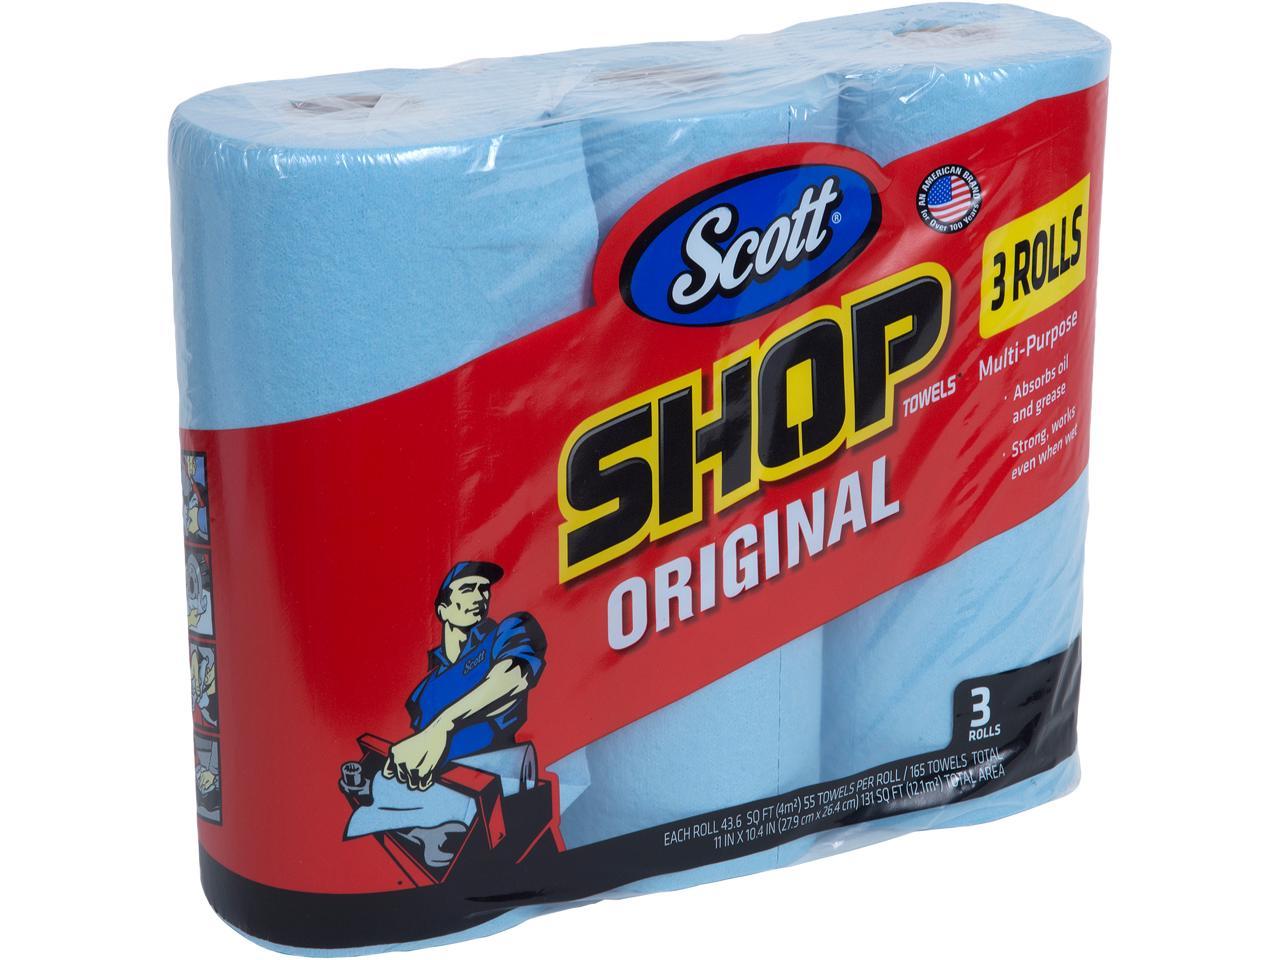 Scott Blue Original Multi Purpose Paper Shop Towels 55 Sheets per roll 